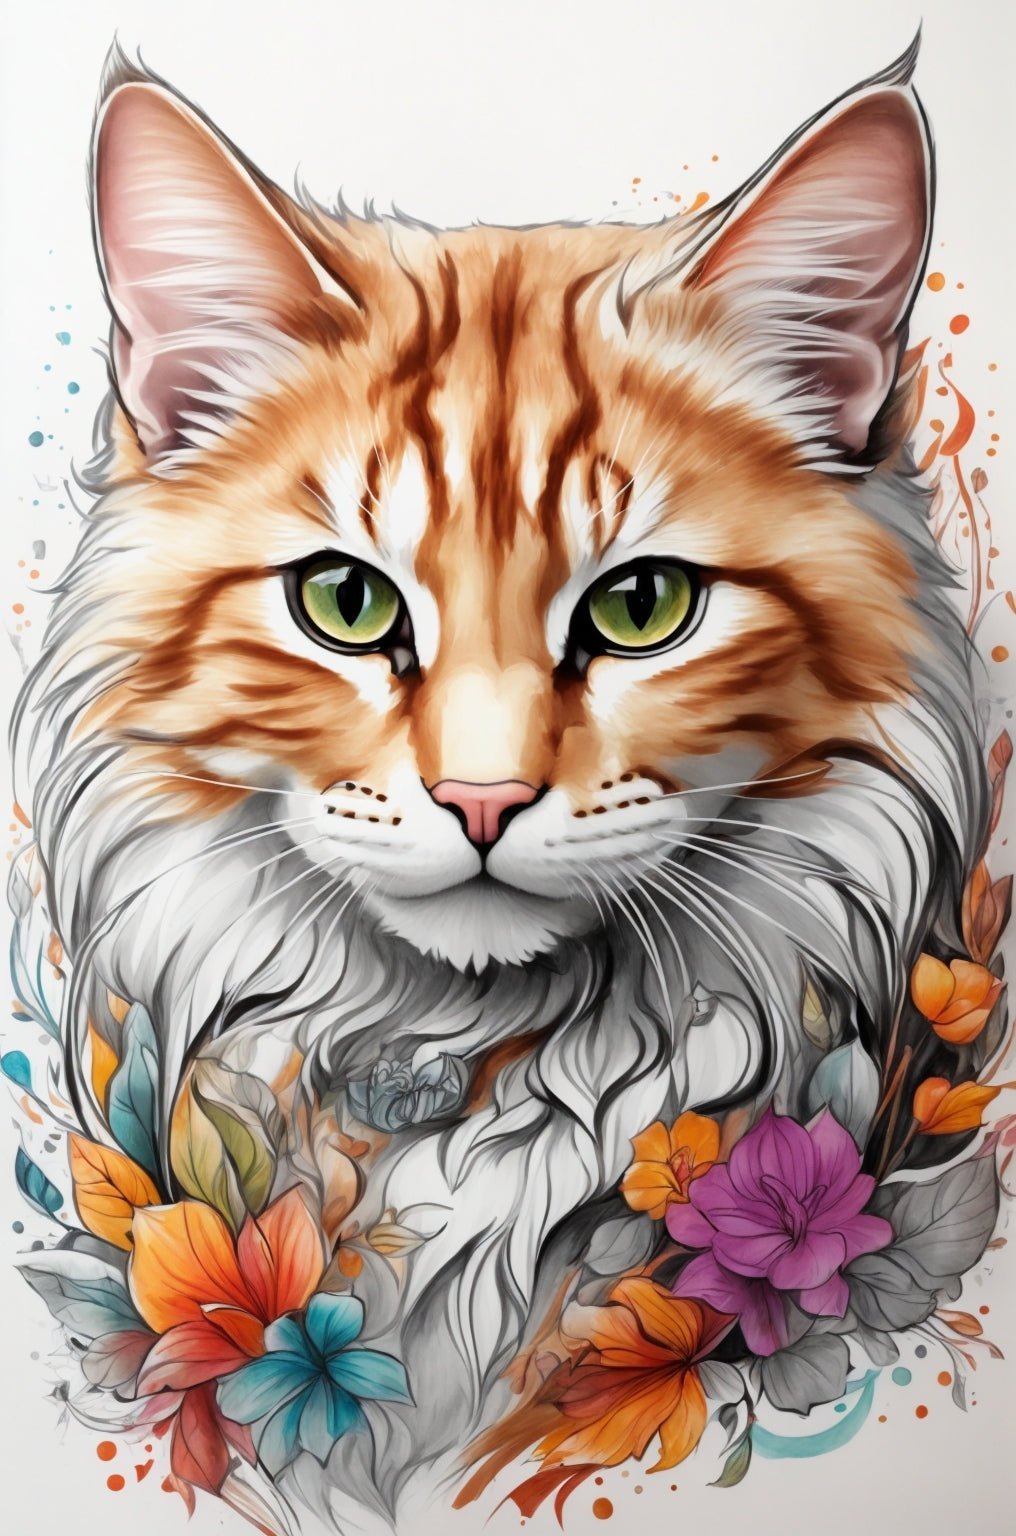 Mandala Cats - Paint by Numbers - Artslo.com